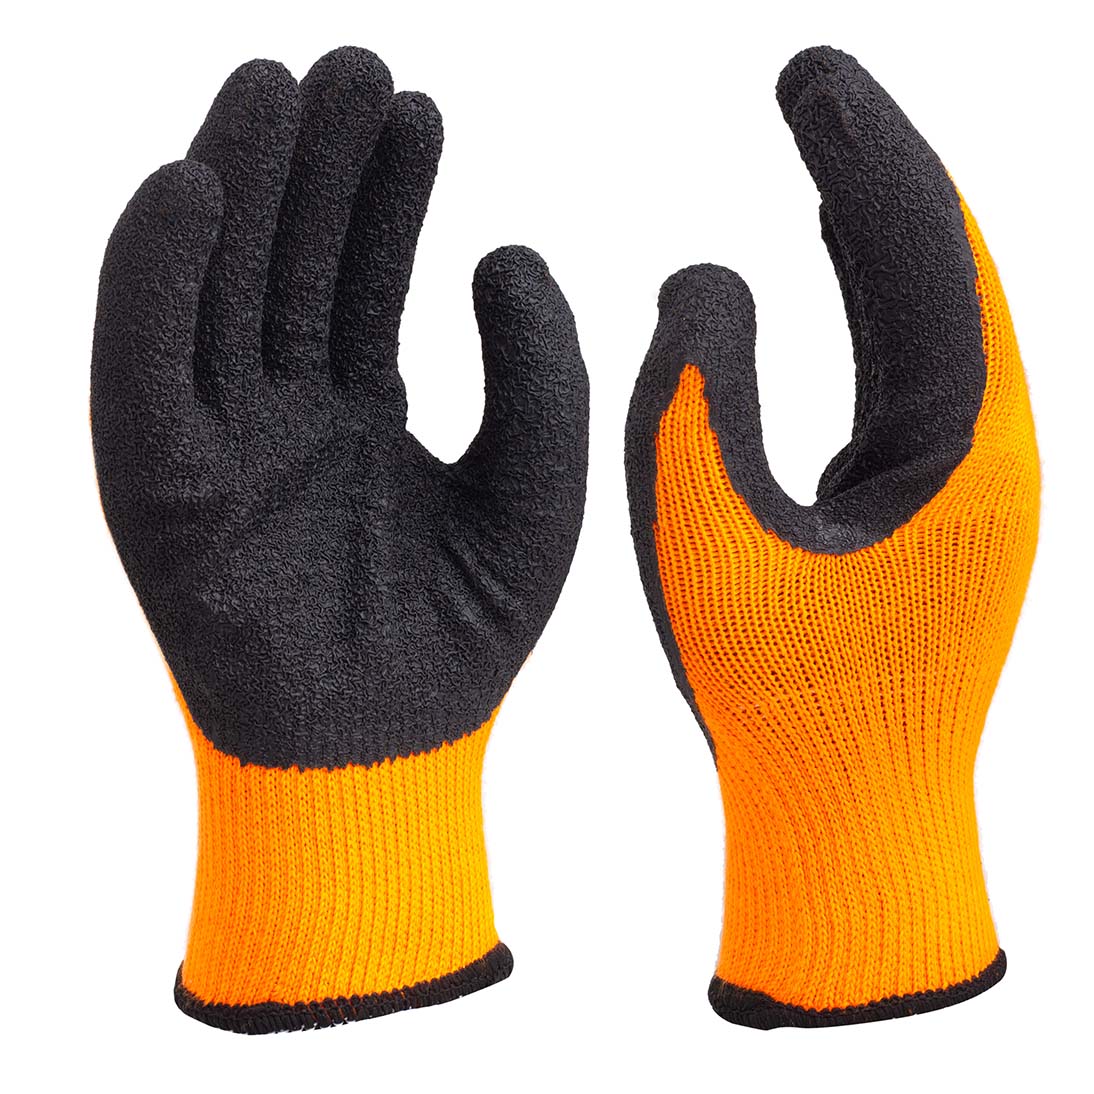 7G Acrylic liner gloves | Palm latex gloves | Crinkle coated gloves